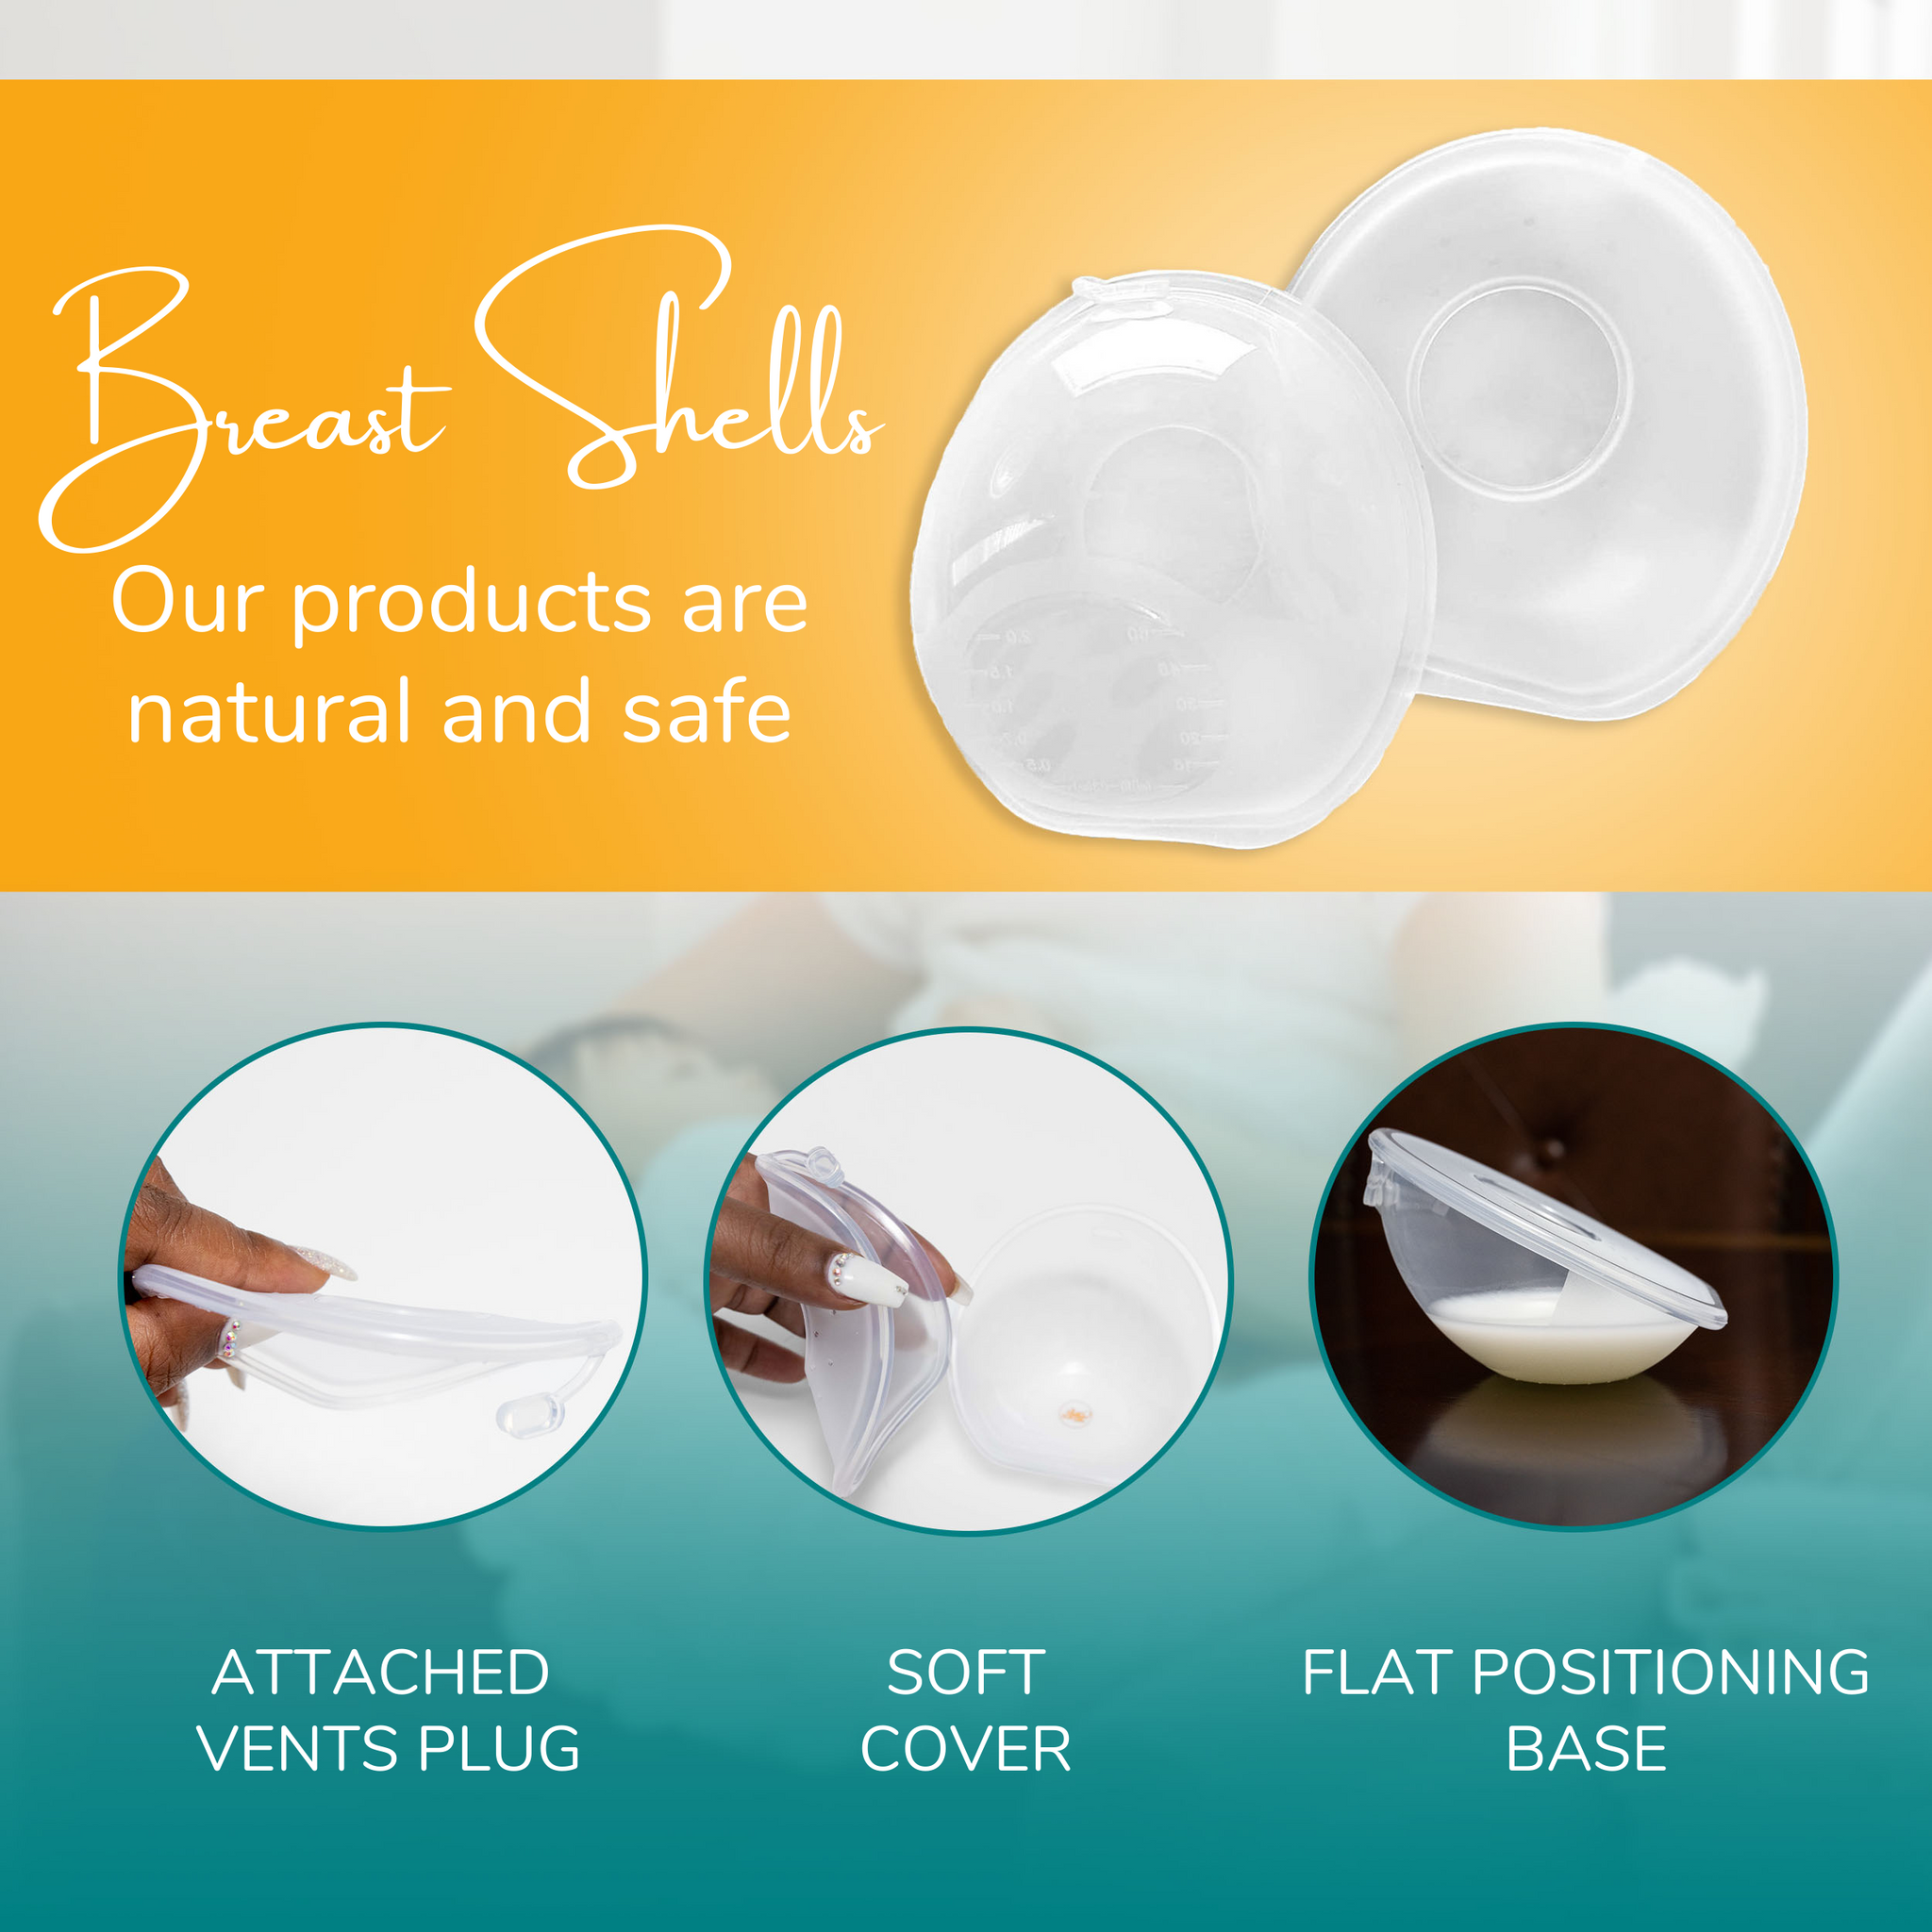 Nipple Shield & Milk Collector shells for breast milk – Cradle Plus